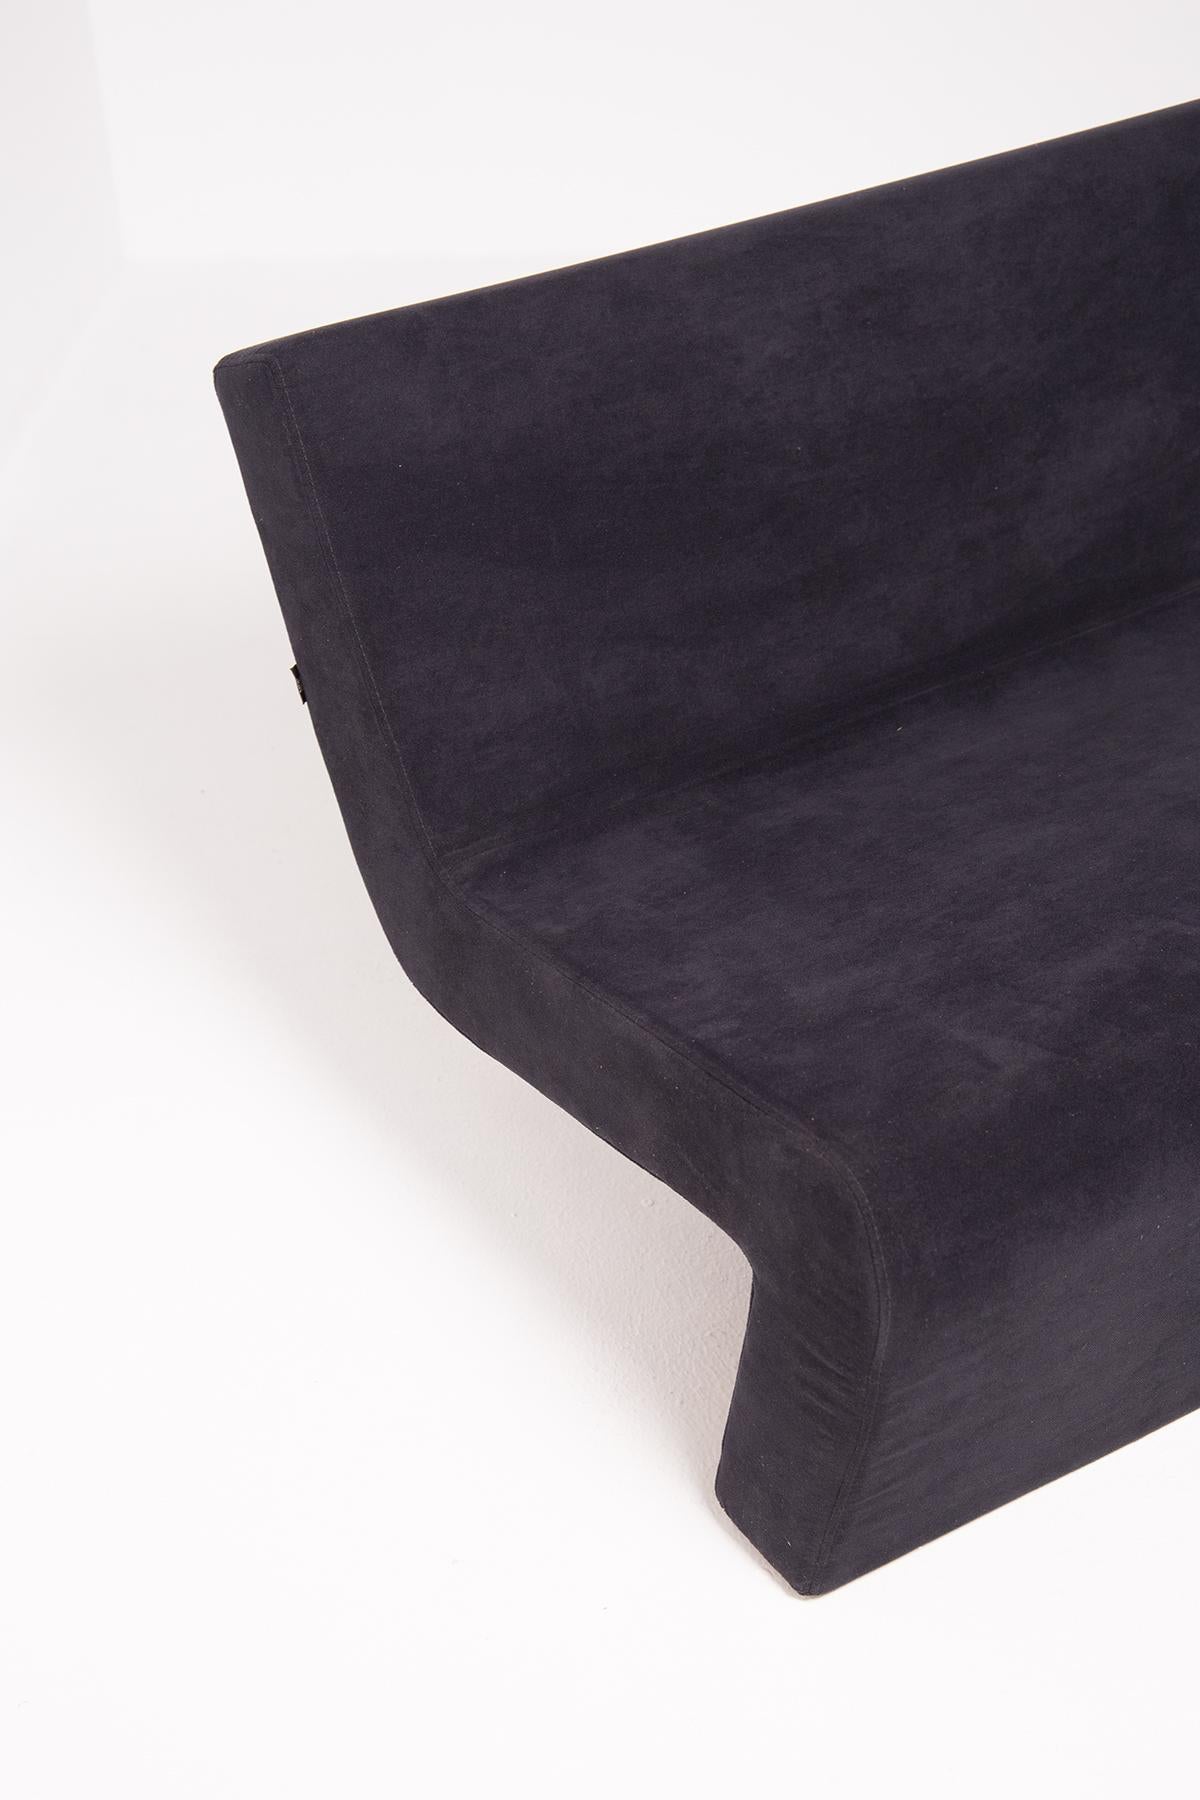 Italian Sofa in Black Velvet and Steel by MDF Italia In Good Condition For Sale In Milano, IT